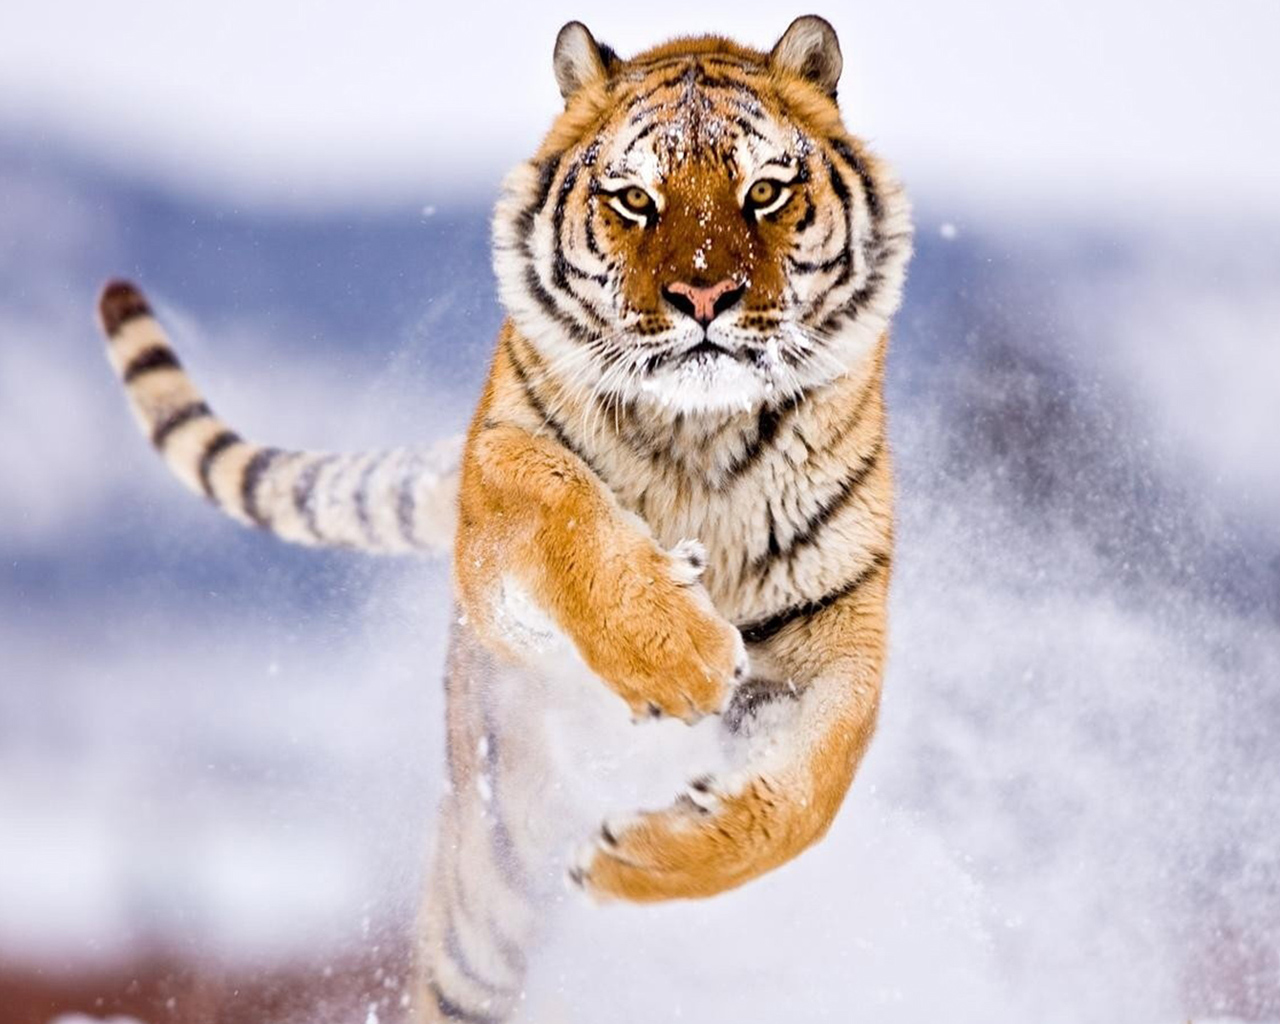 Amur Tiger in Snow481042657 - Amur Tiger in Snow - Tiger, Snow, Rainforest, Amur